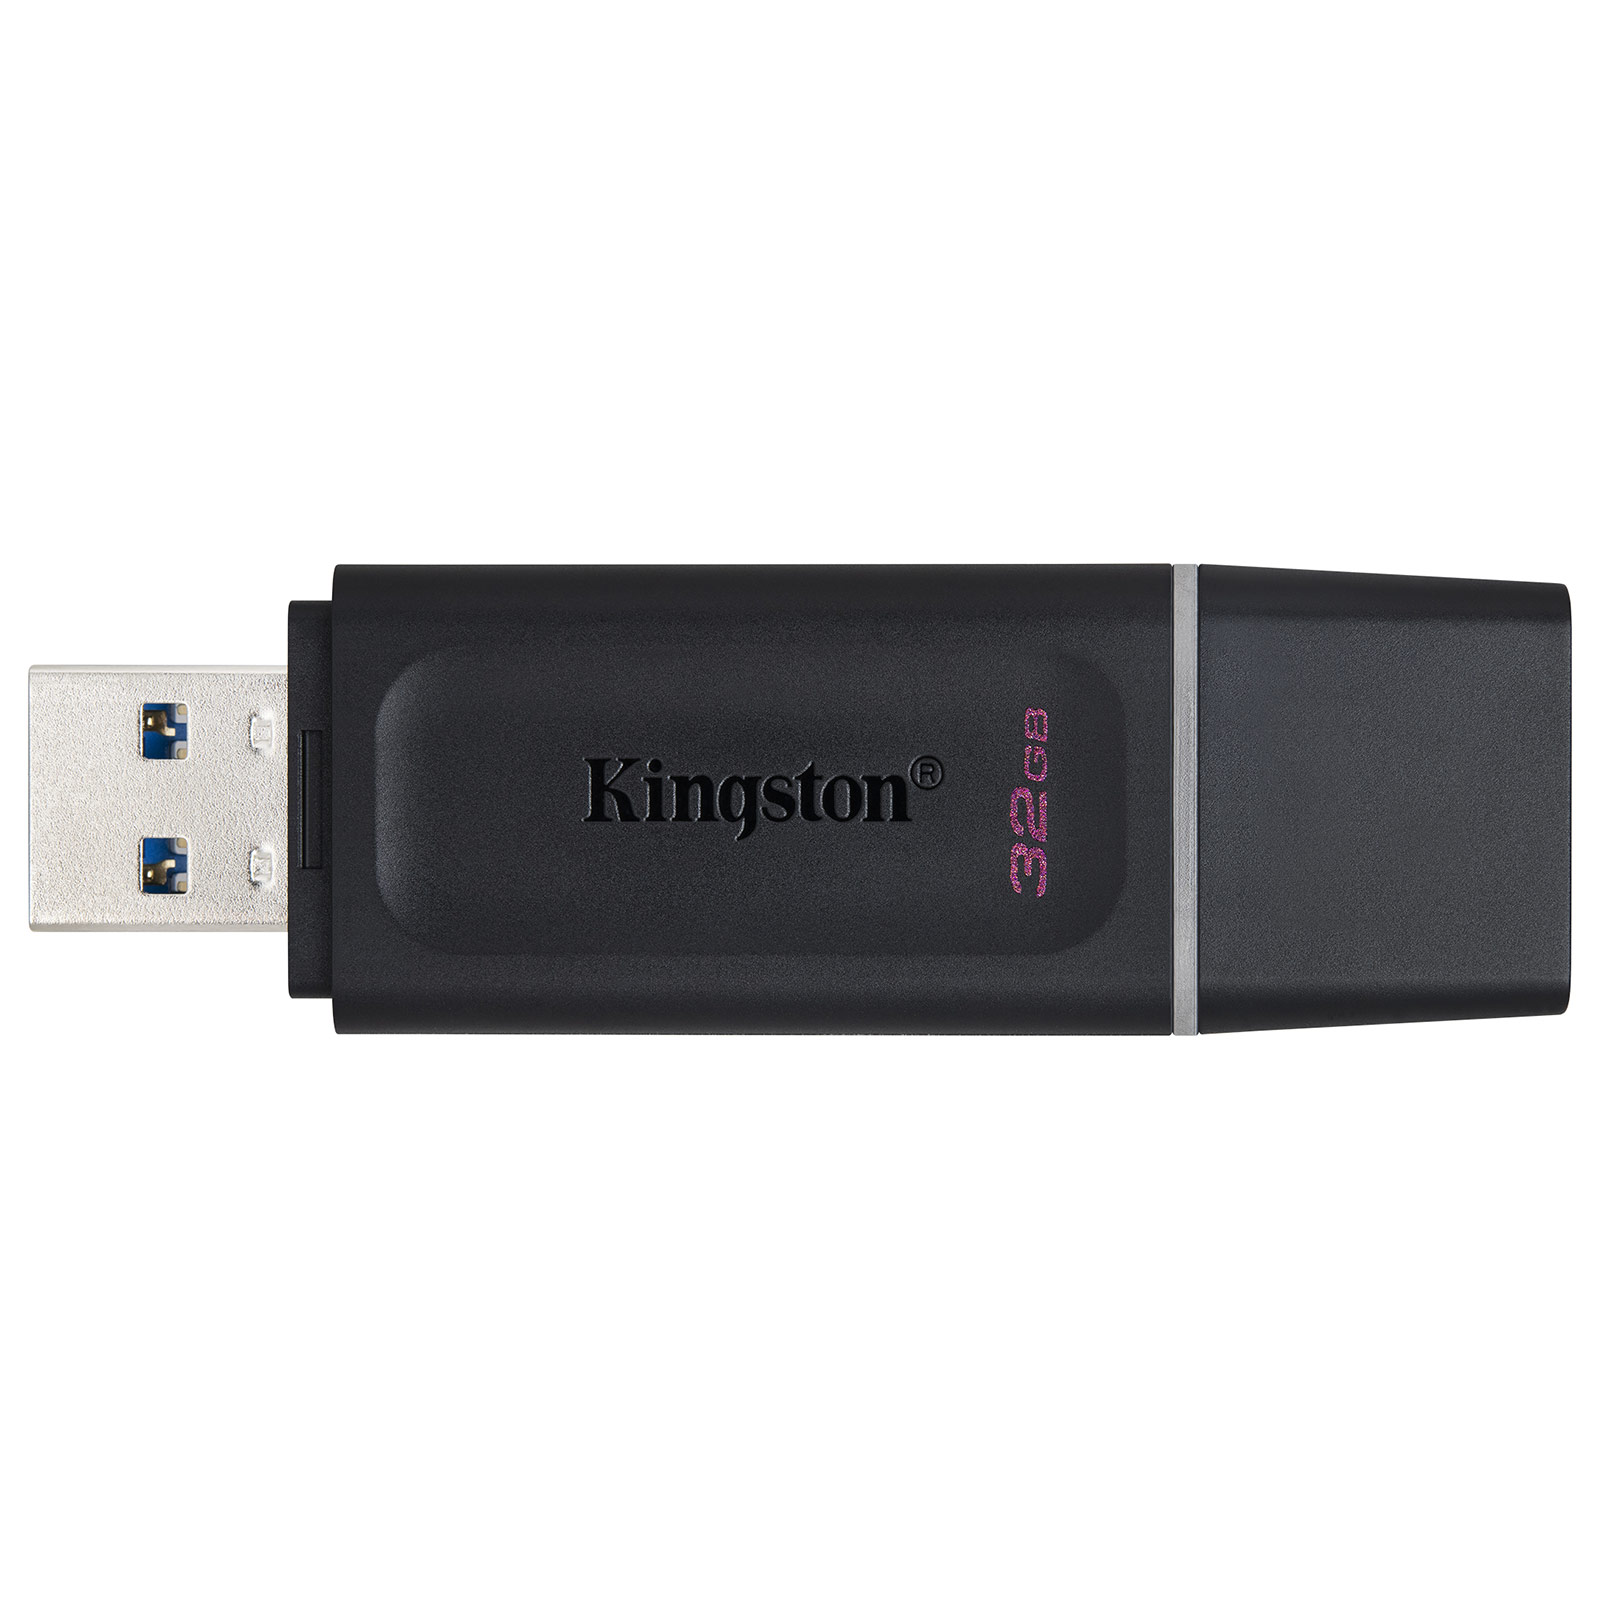 Kingston 32Go USB 3.2 DataTraveler - Clé USB Kingston - 2